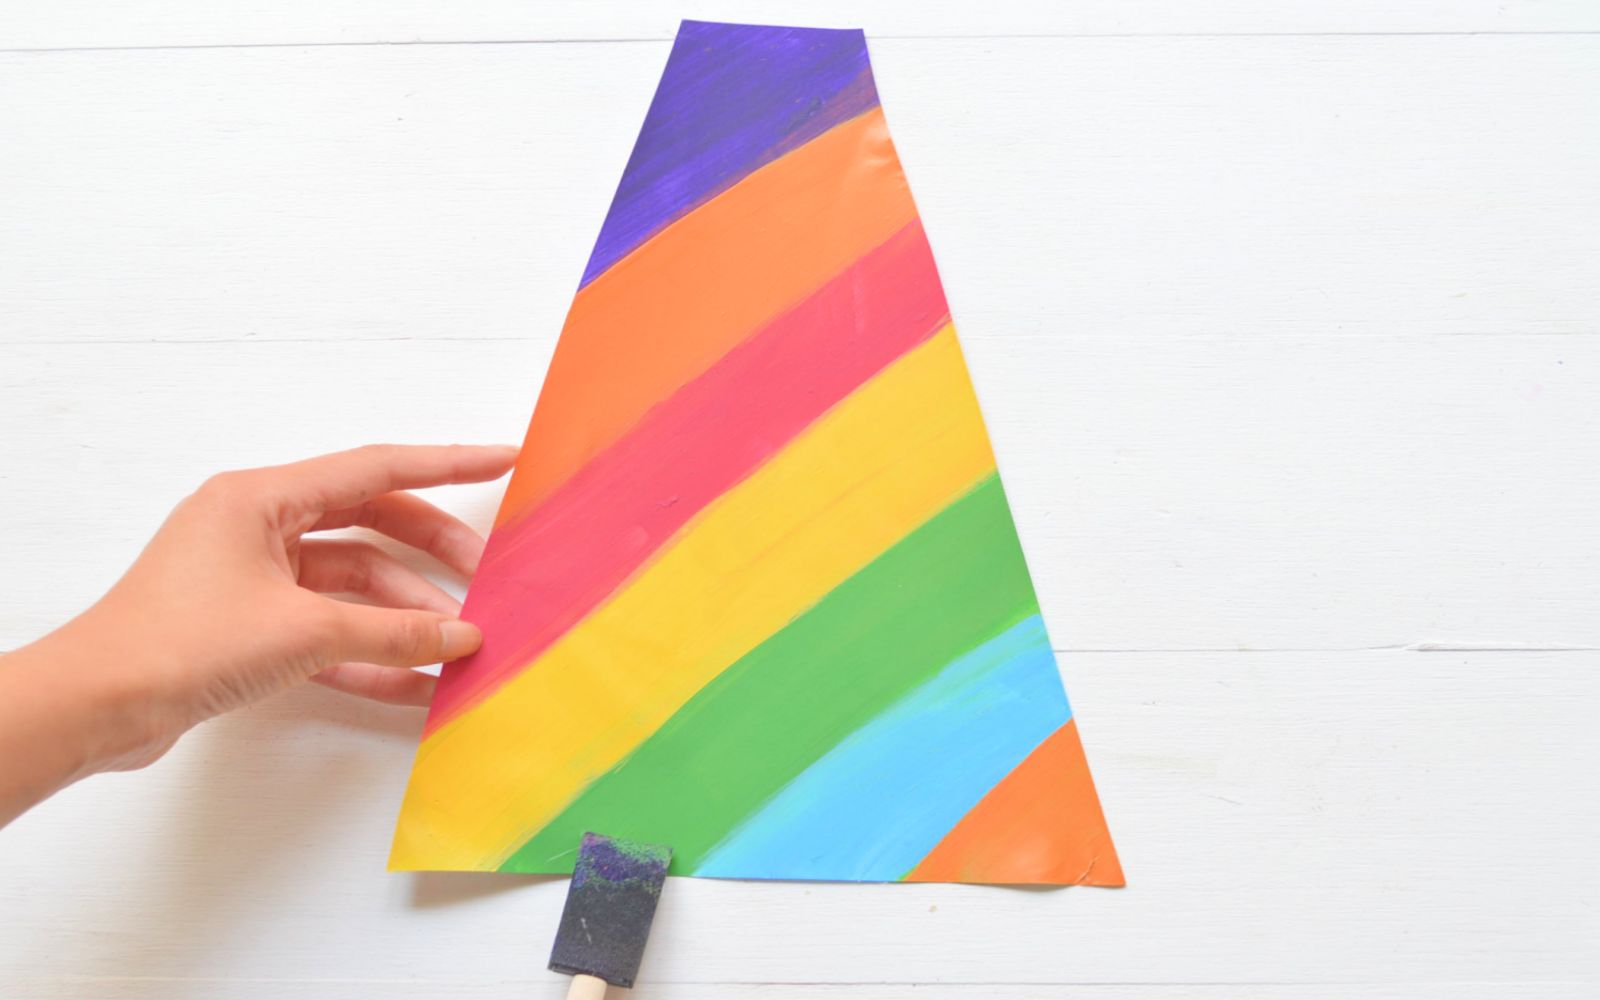 DIY Lisa Frank Costumes: Rainbow Unicorn